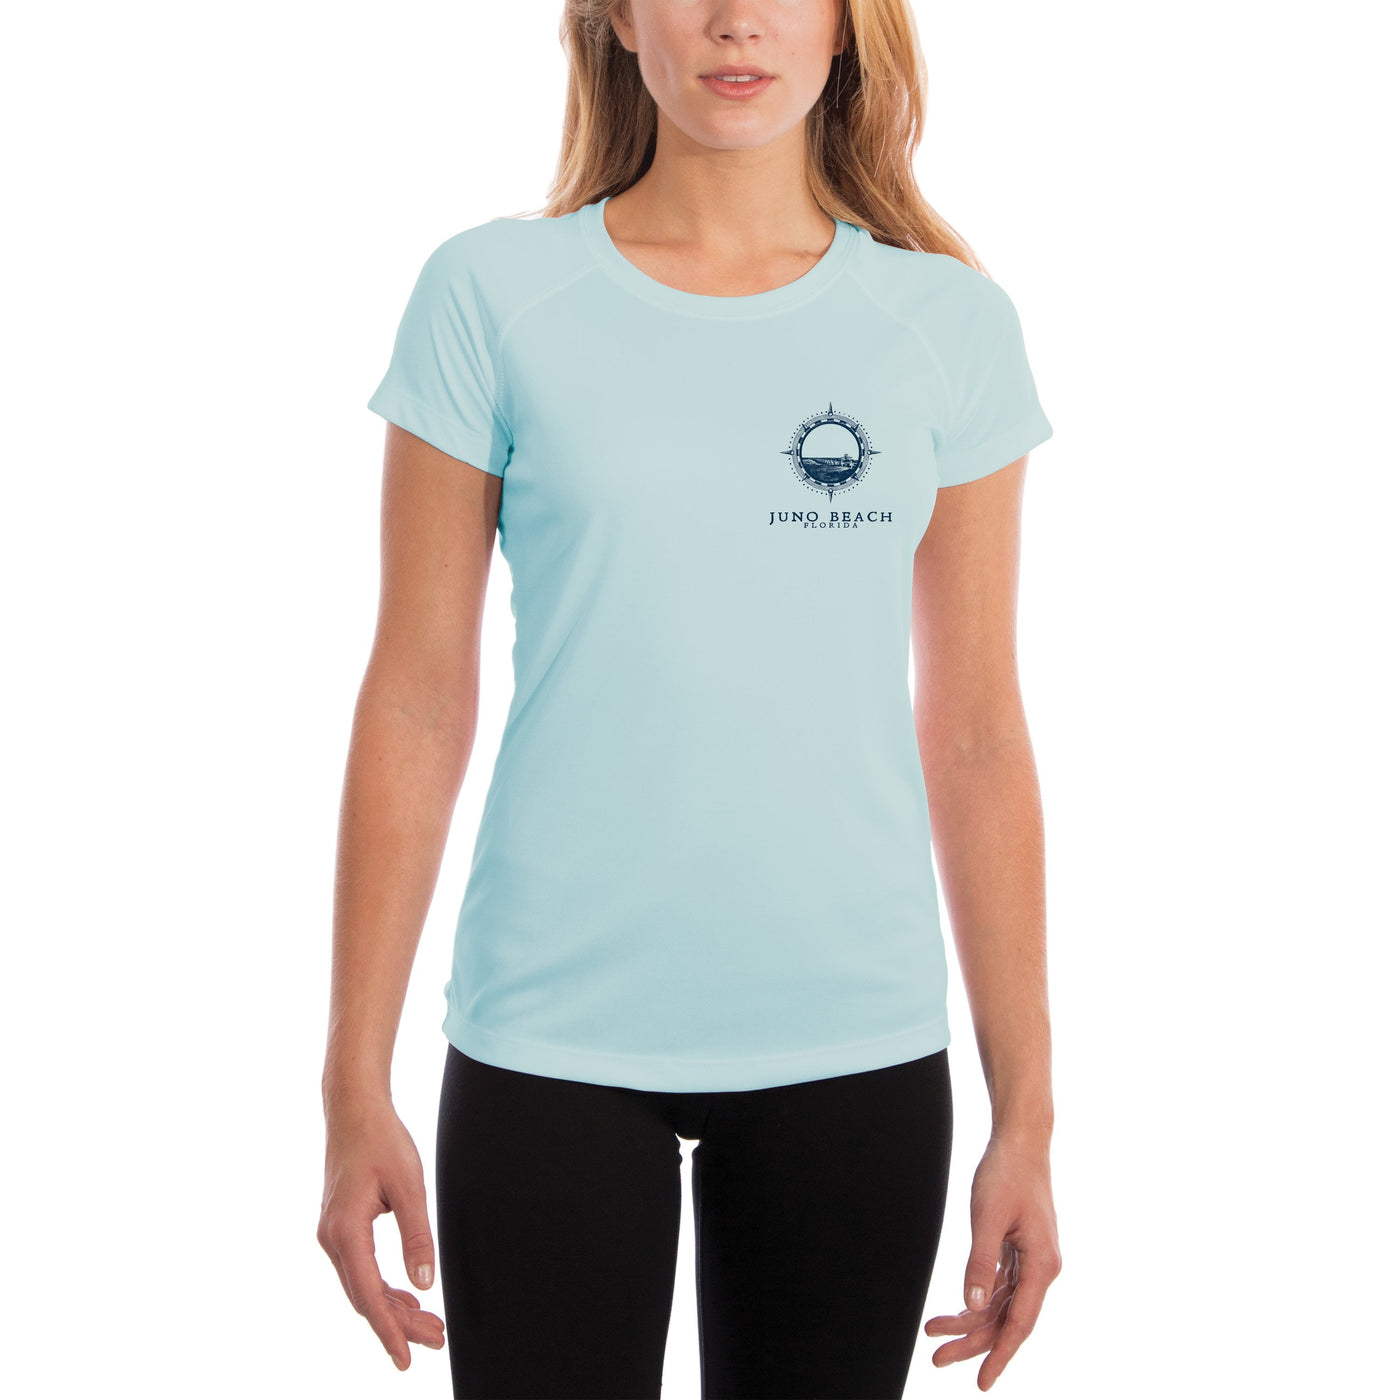 Compass Vintage Juno Beach Women's UPF 50+ Short Sleeve T-shirt